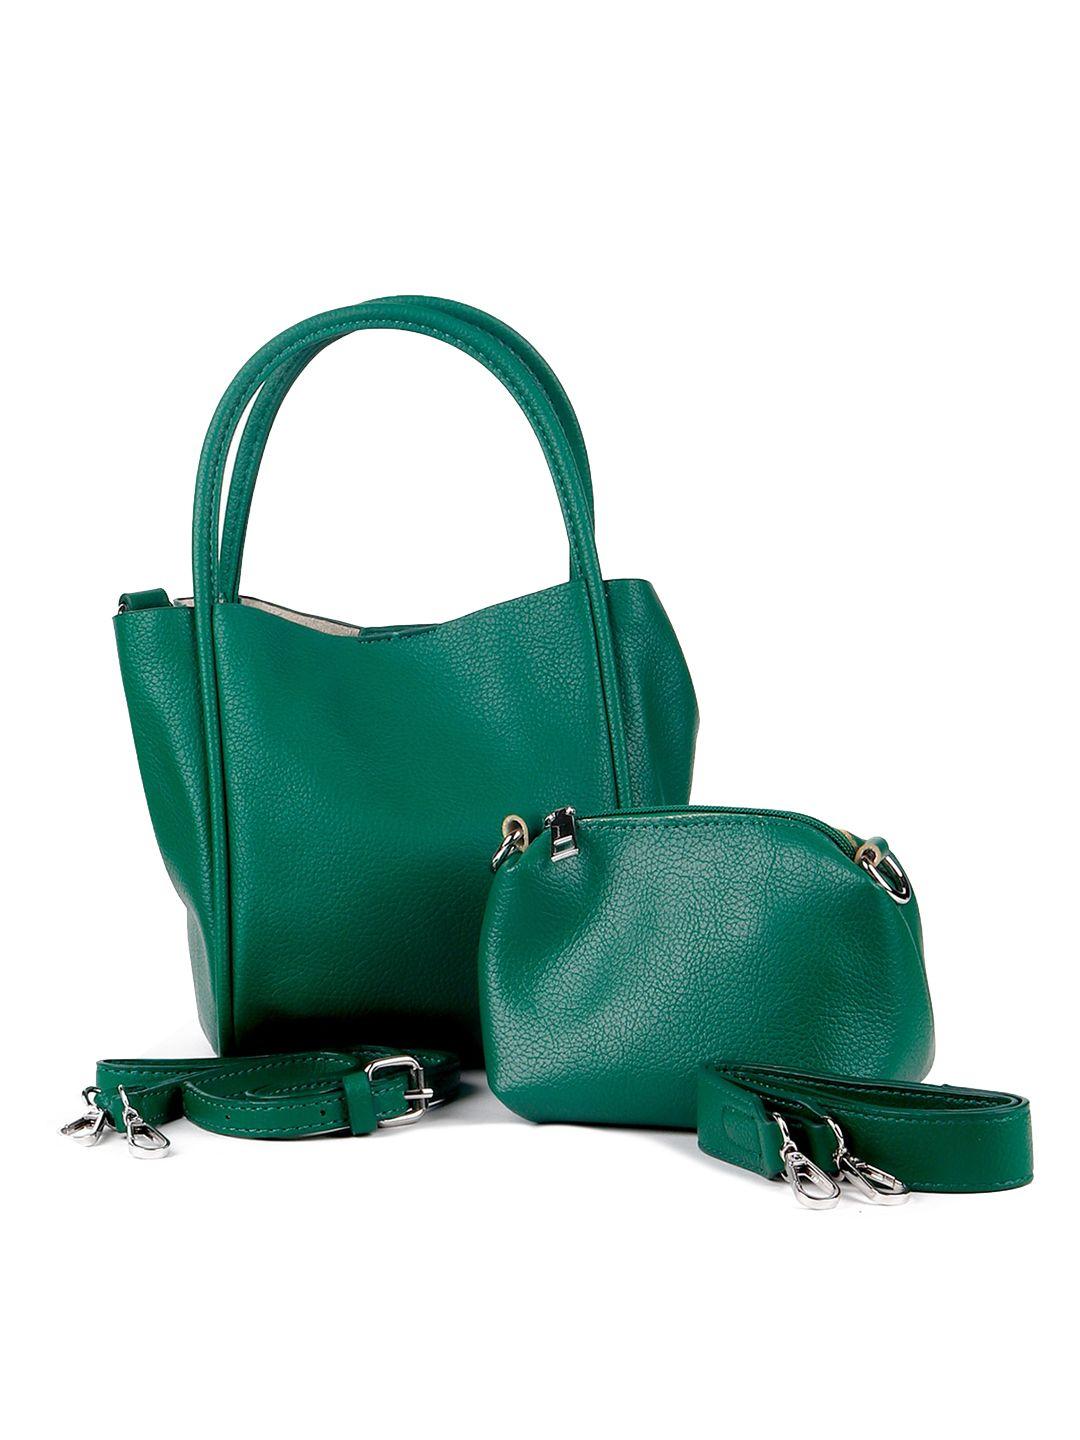 odette women green leather oversized structured handheld bag